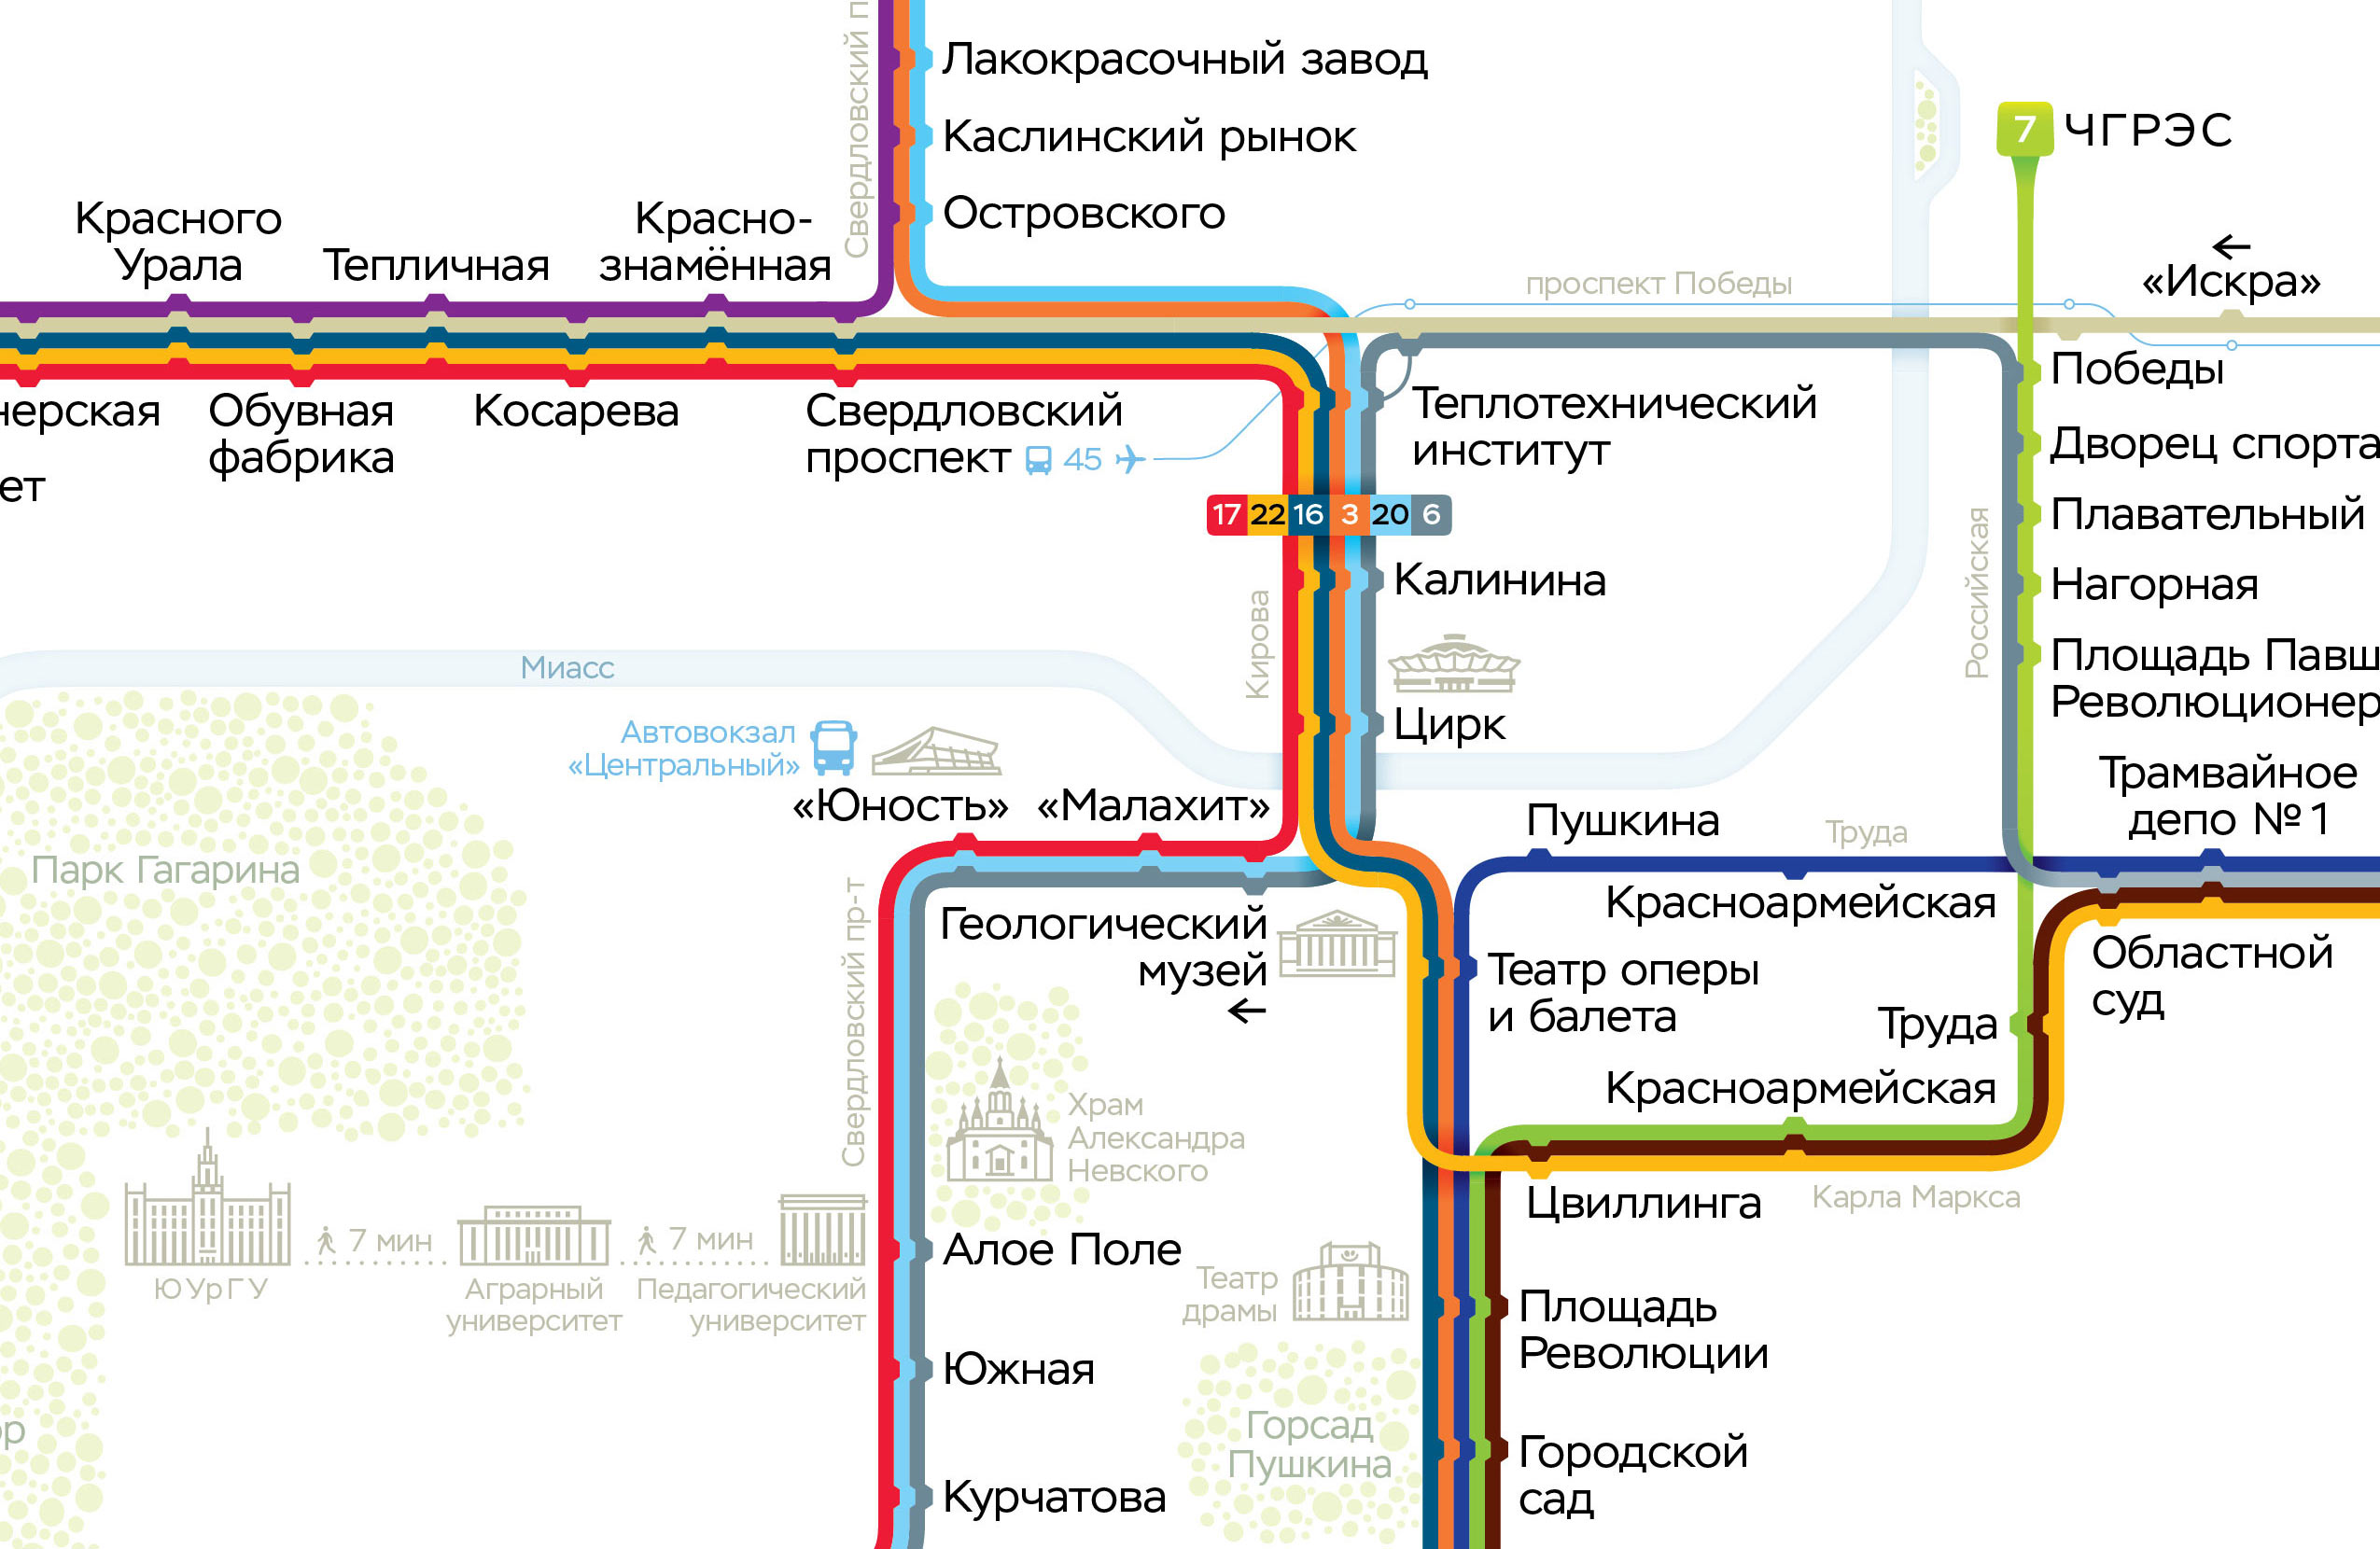 Official Chelyabinsk trams diagram